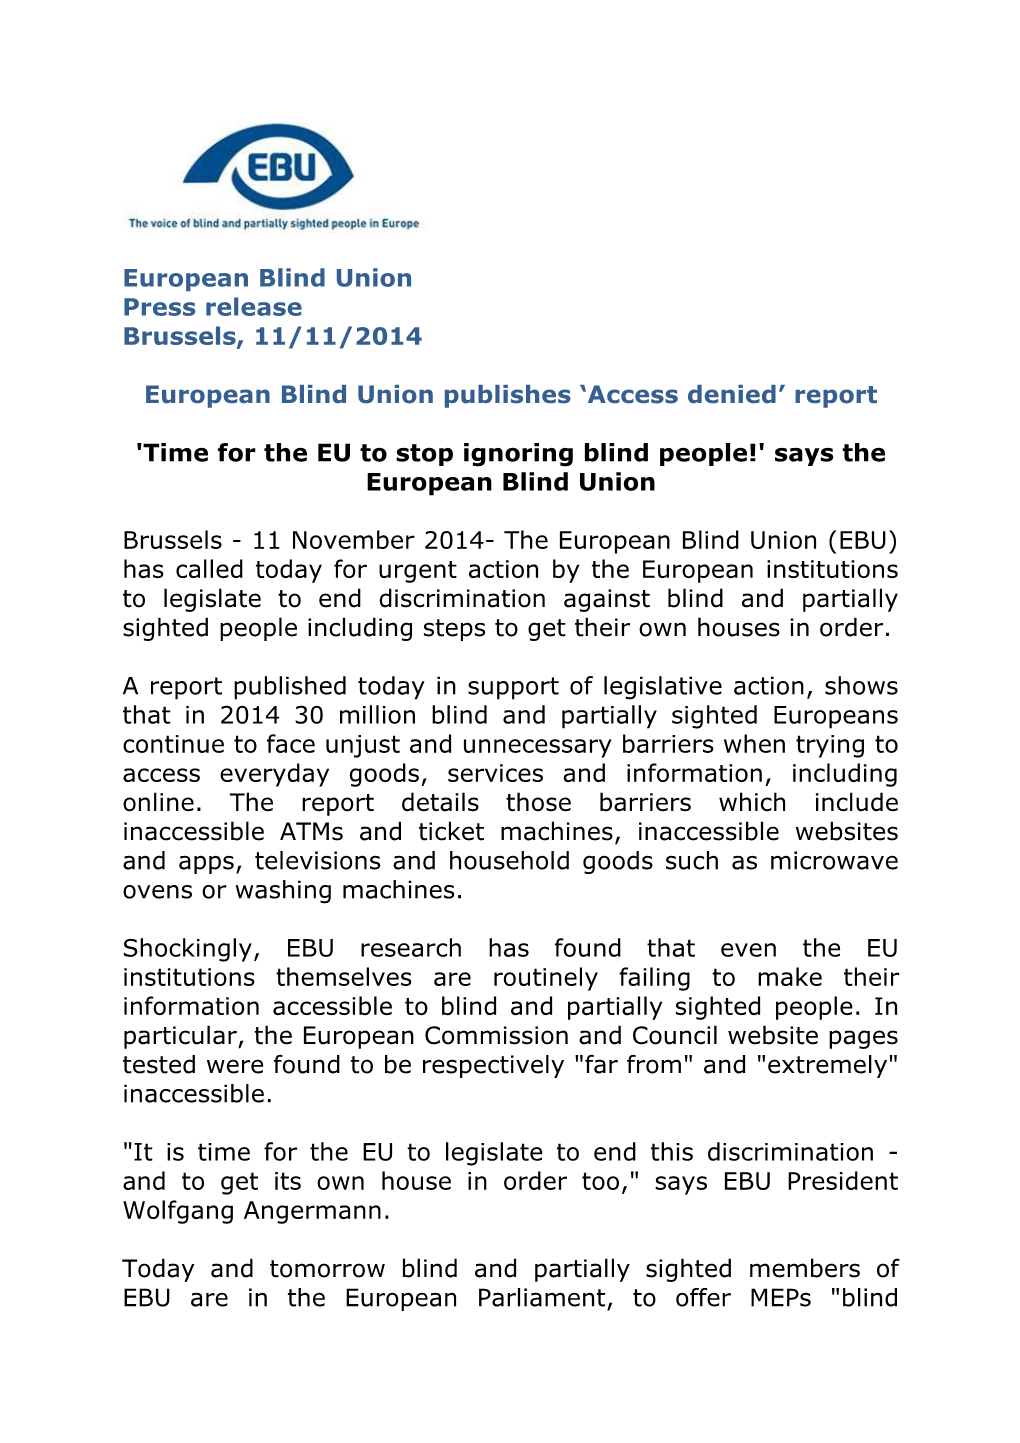 European Blind Union Publishes Access Denied Report